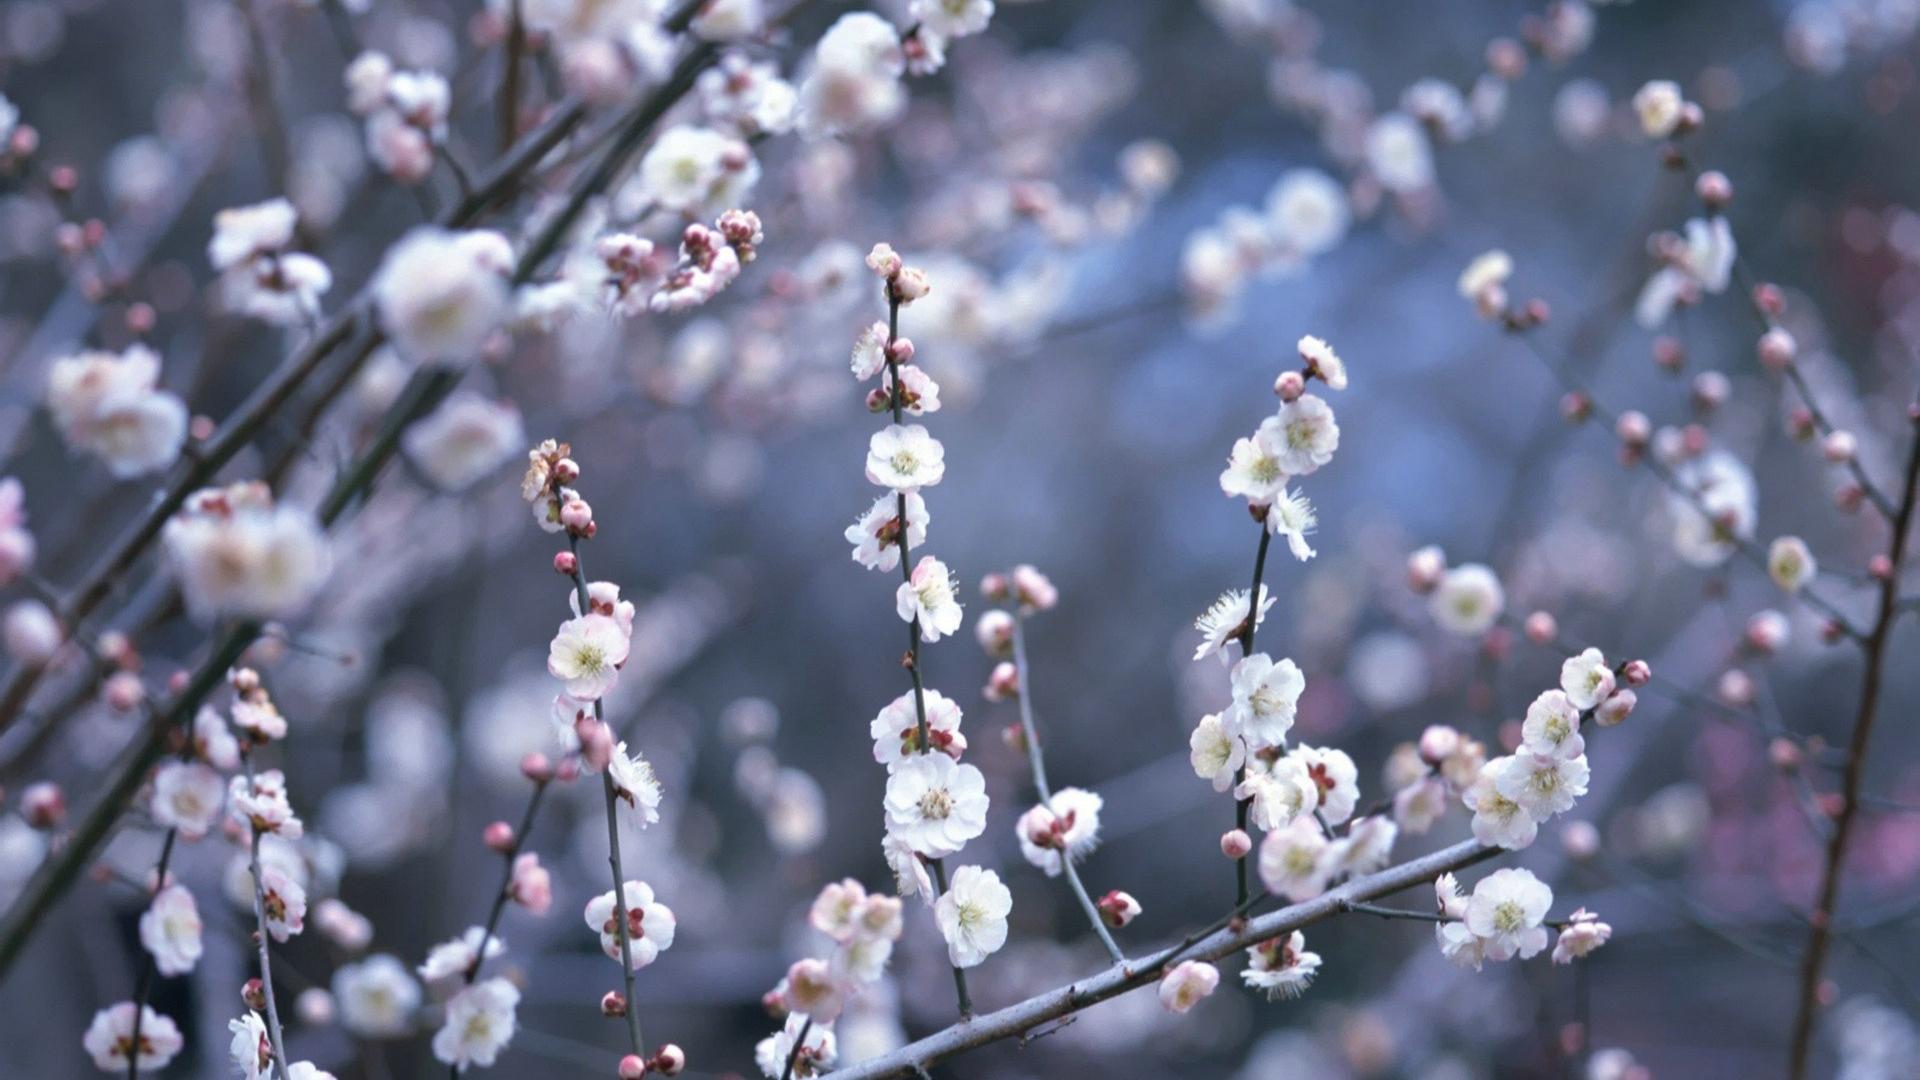 Japan cherry blossoms flowers spring (season) wallpaper | (6956)